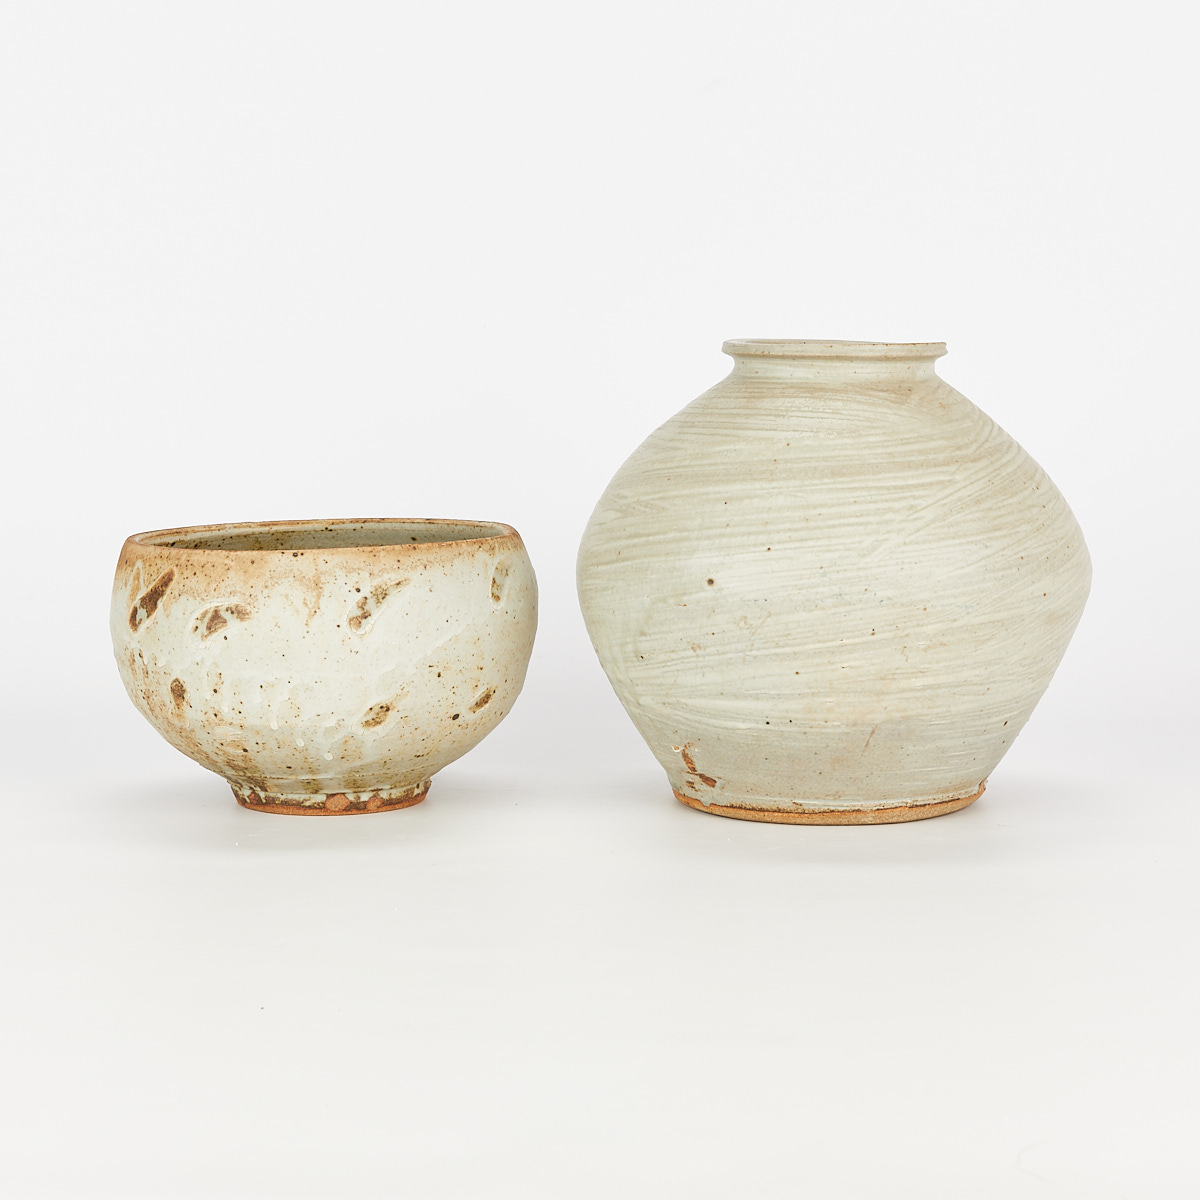 2 Studio Ceramic Vessels - Wayne Branum - Image 3 of 10